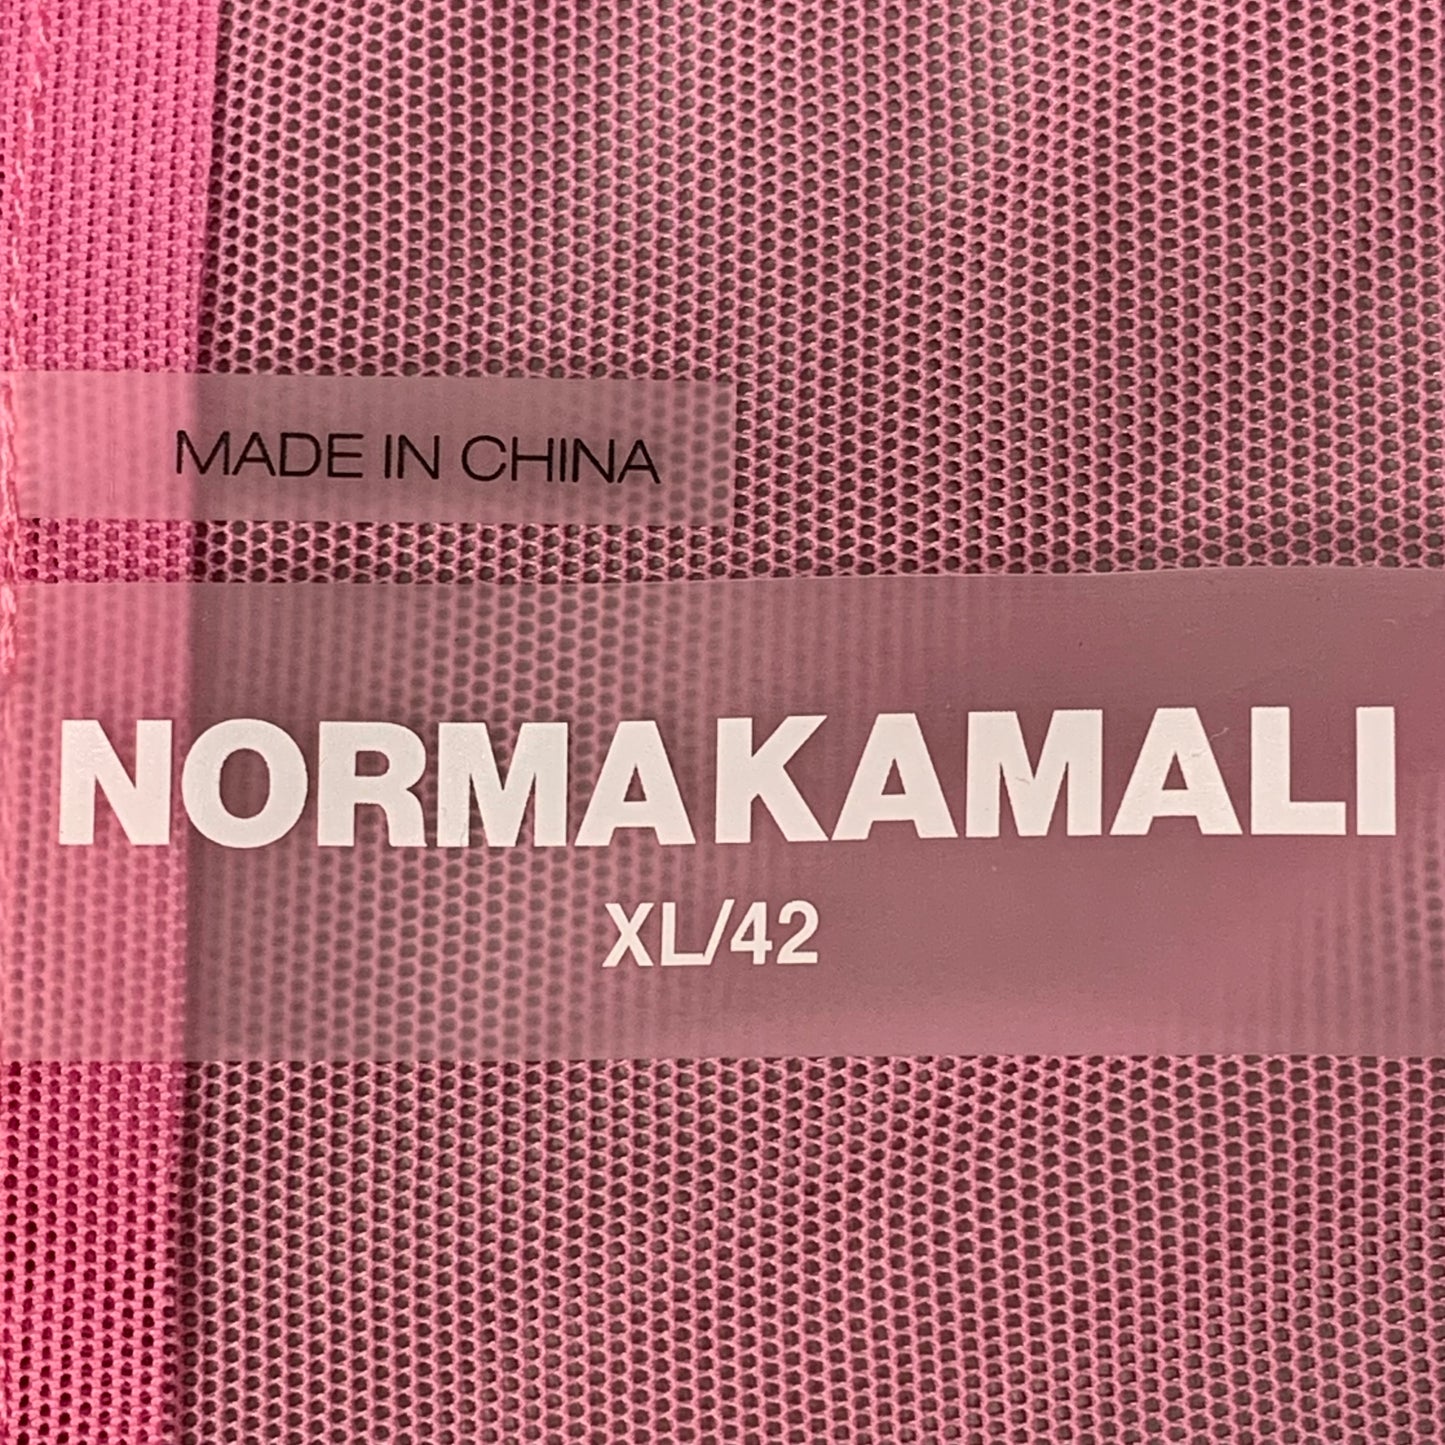 NORMA KAMALI Nk Shirt w/ Faux Pockets Sz XL/42 Candy Pink ST1236MS963966